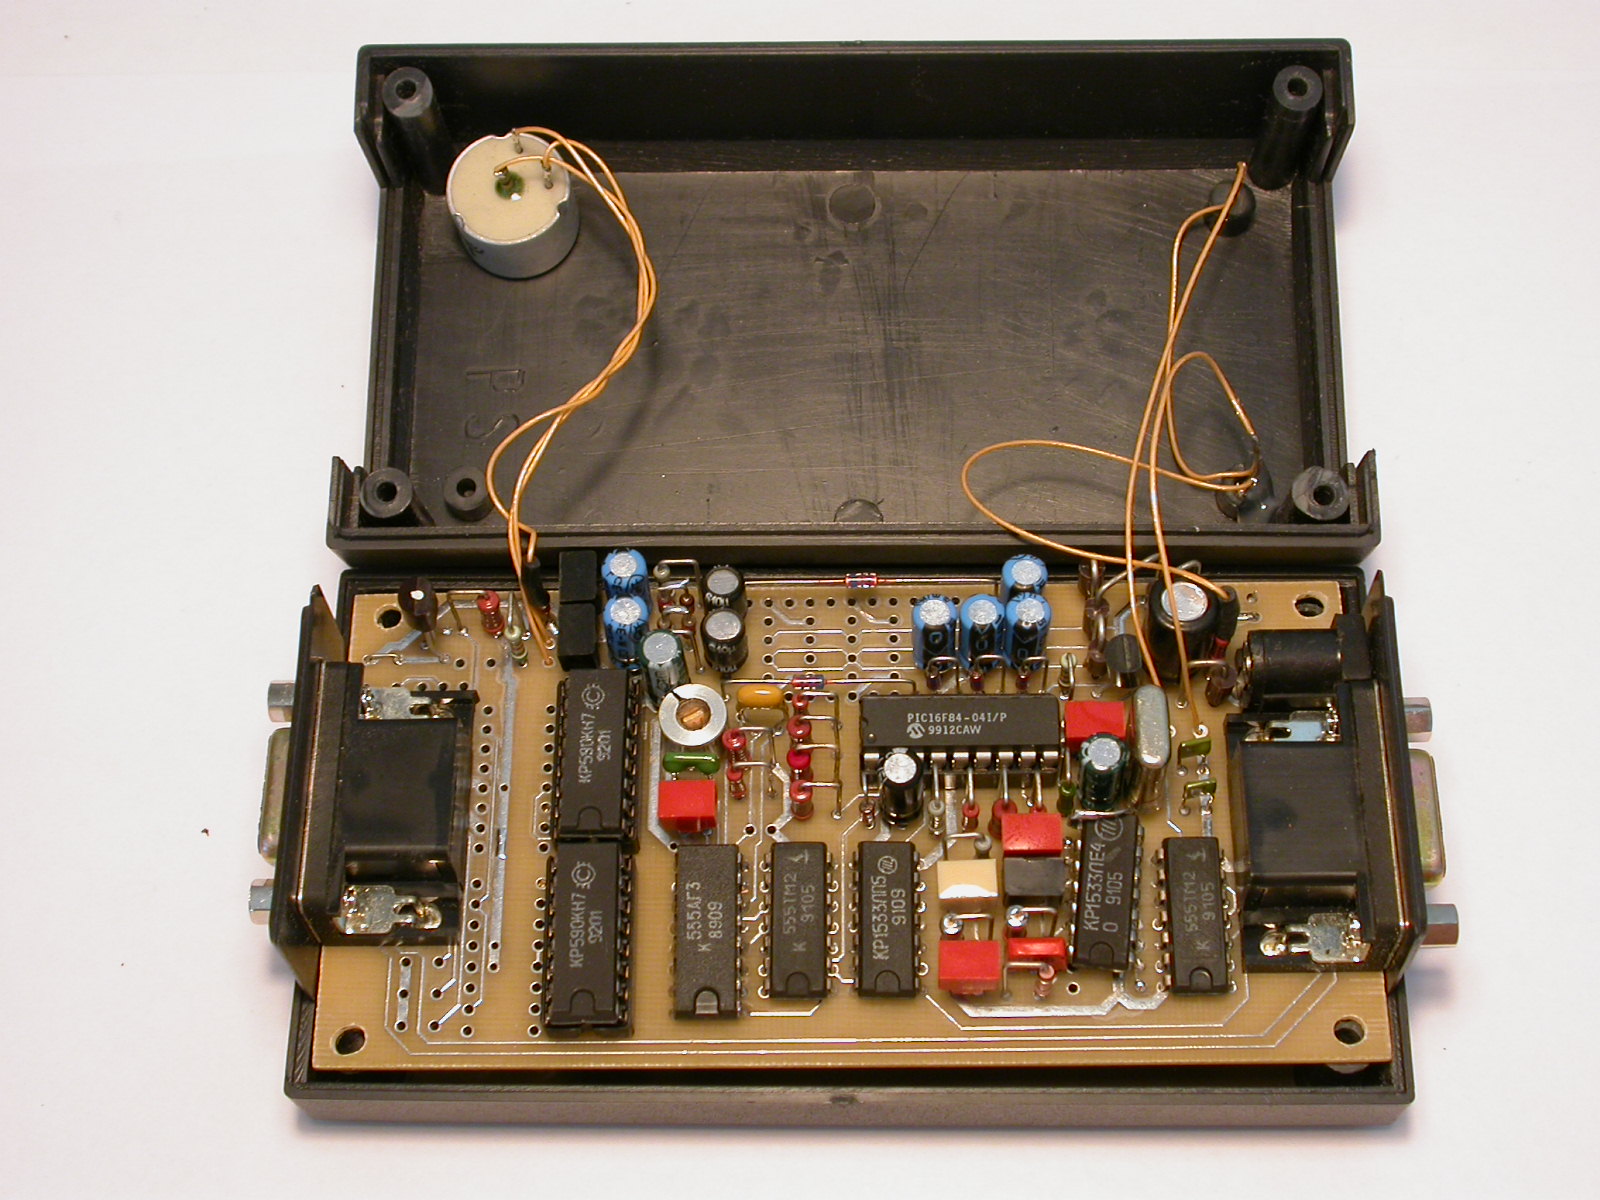 Inside the VGA stimulator